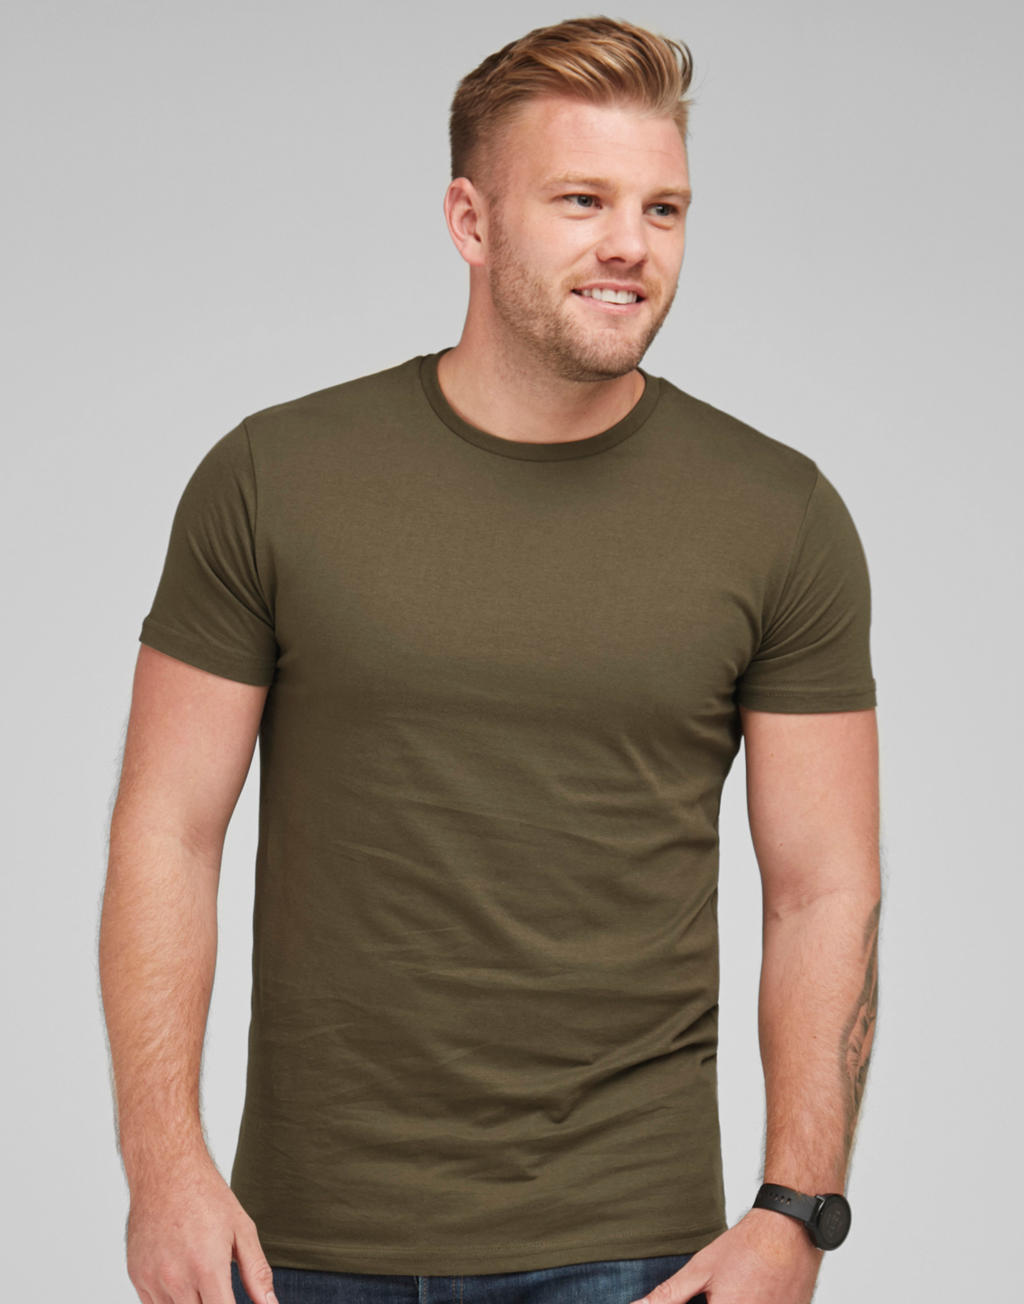 SG Perfect Print Tagless T-Shirt kaufen | Basic-Shirts